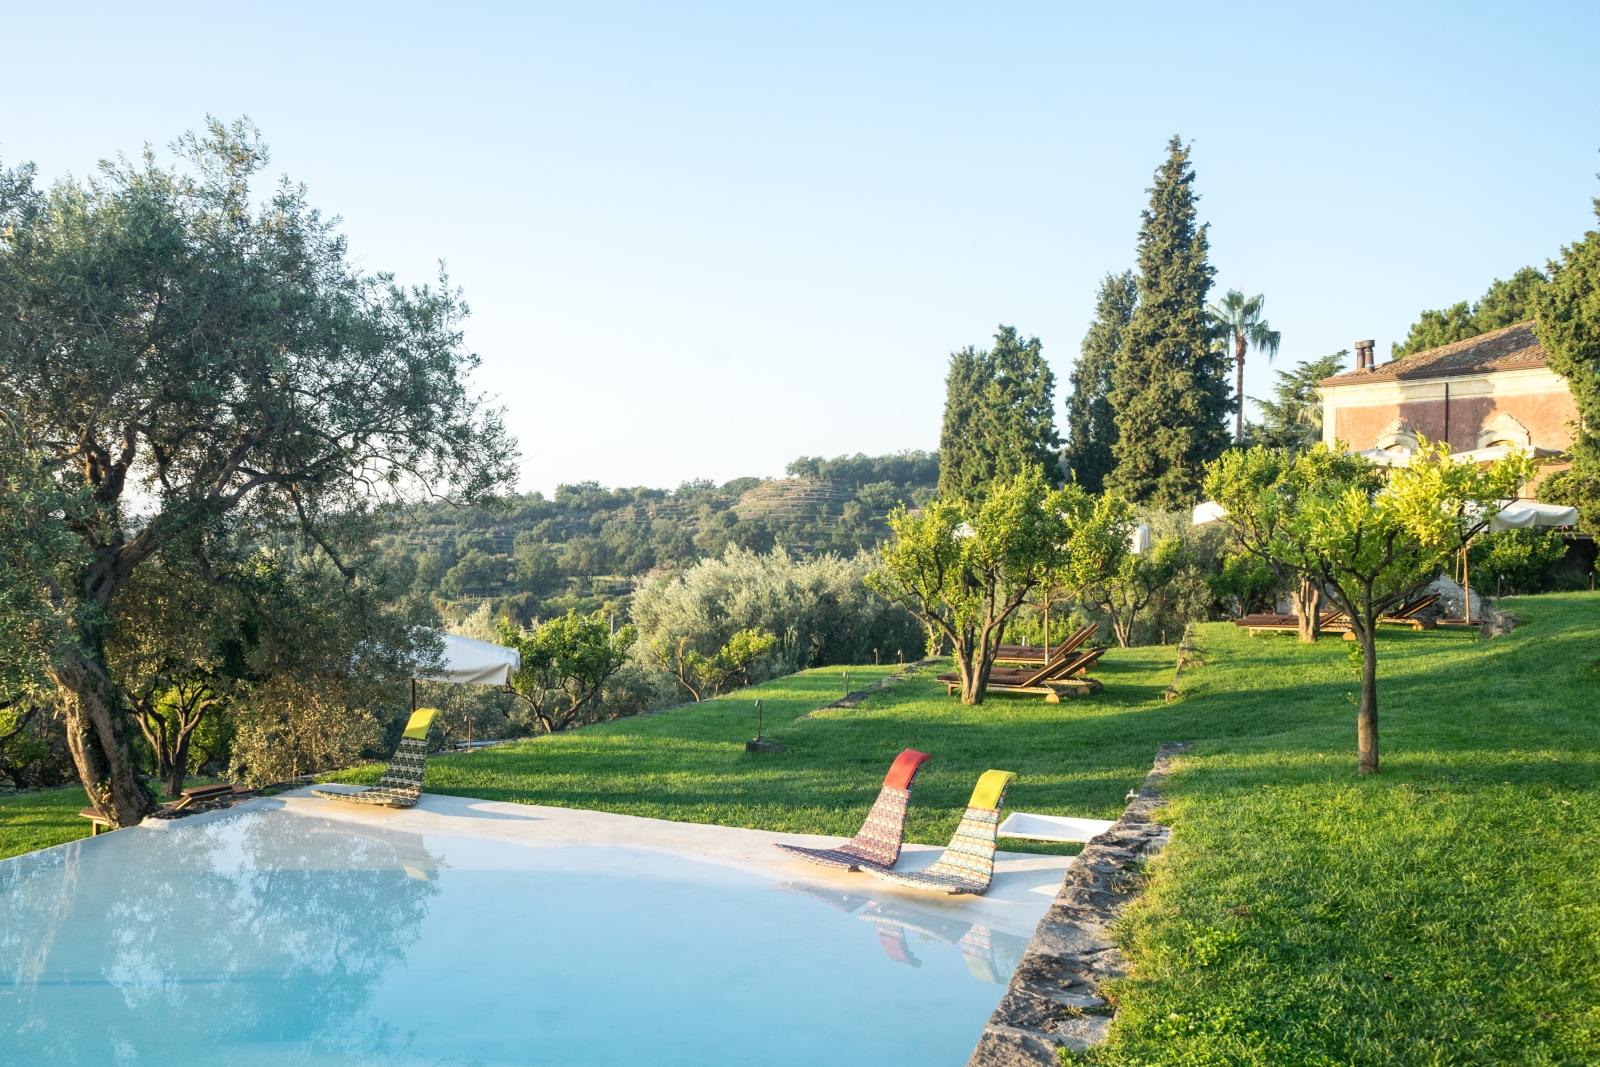 Pool and view at Monaci delle Terre Nere